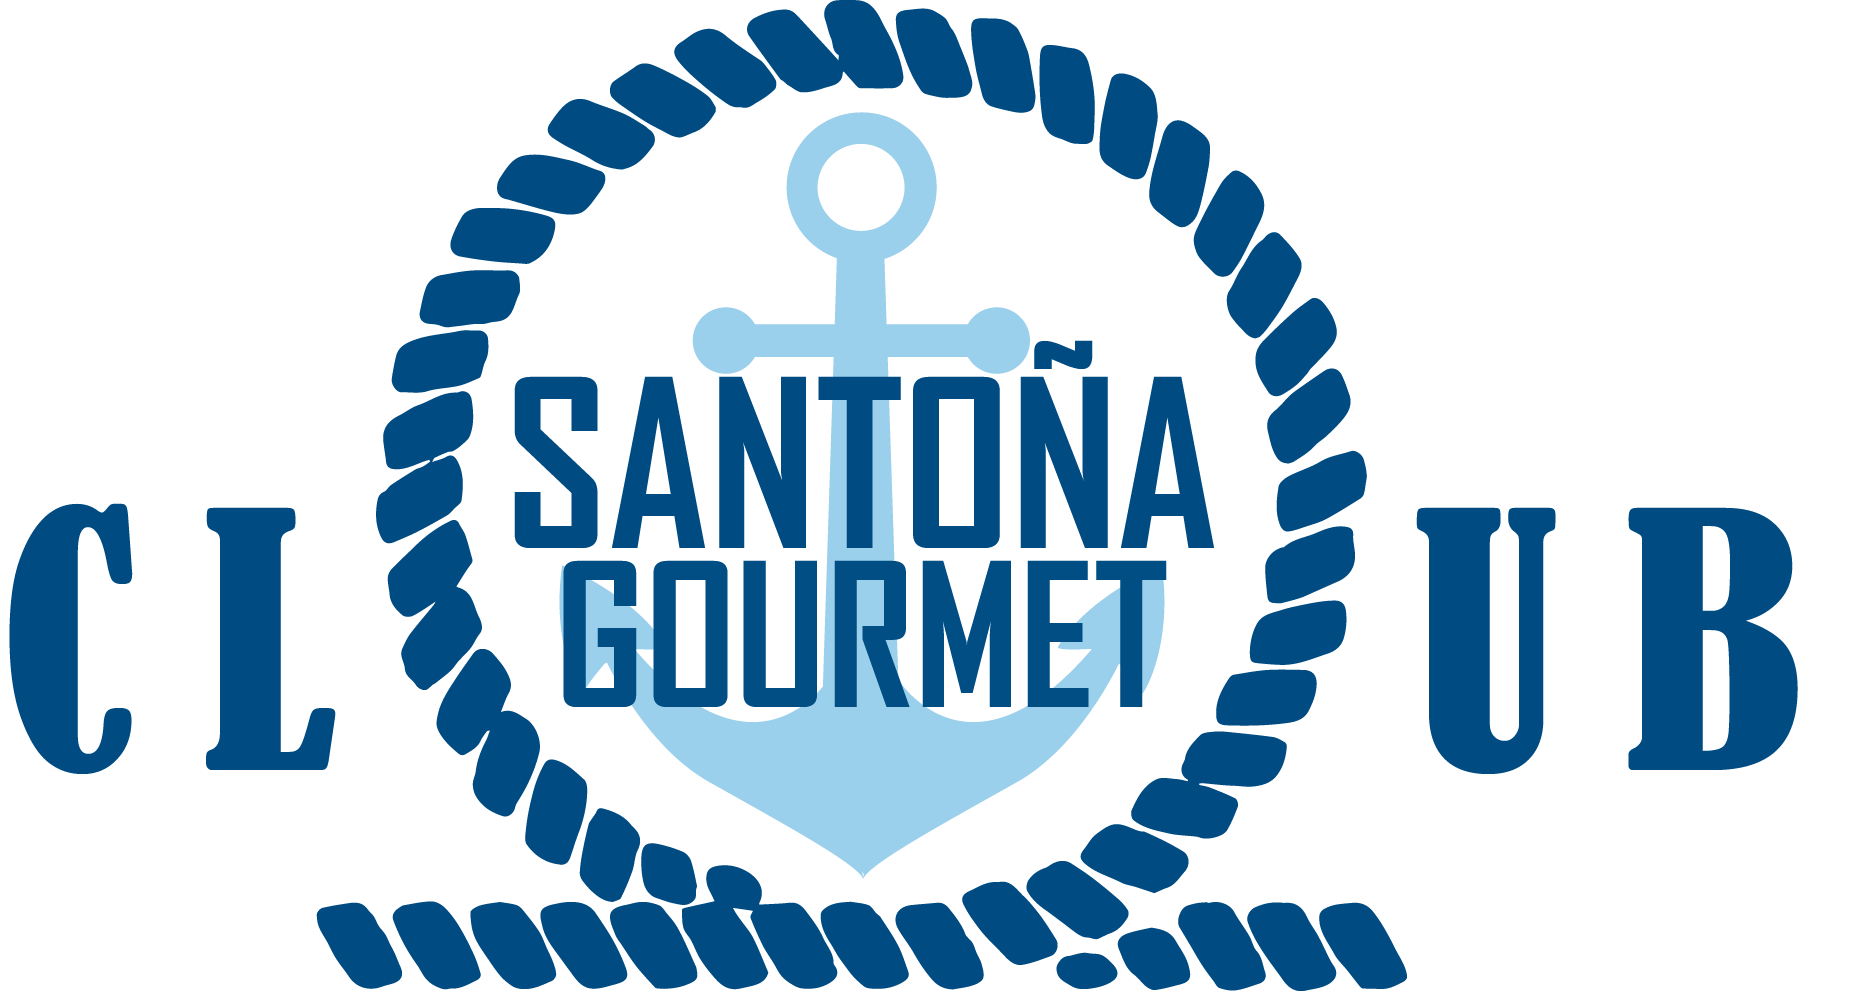 Club Santoña Gourmet